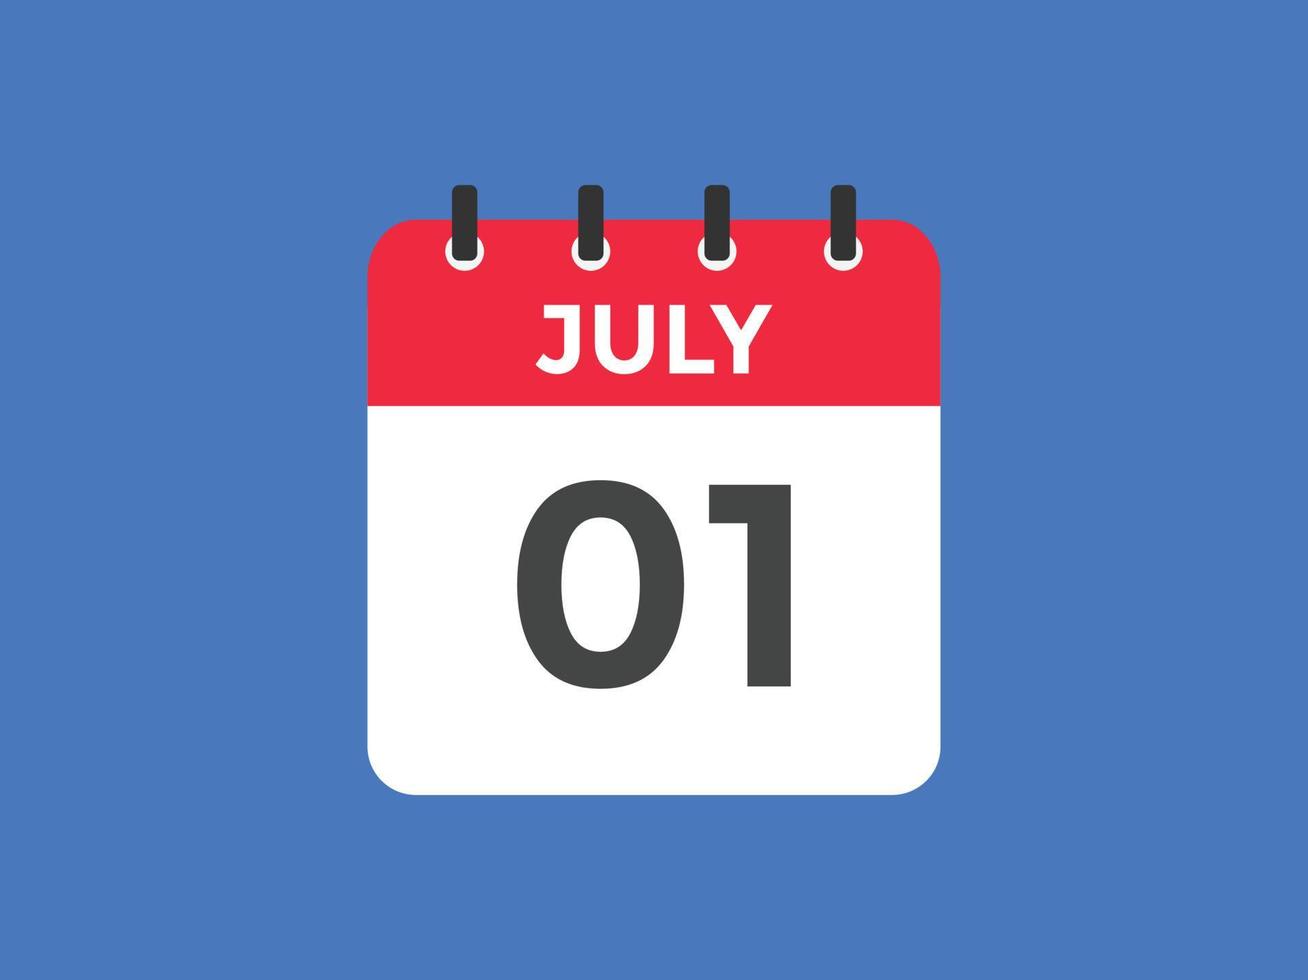 juli 1 kalender påminnelse. 1:a juli dagligen kalender ikon mall. kalender 1:a juli ikon design mall. vektor illustration